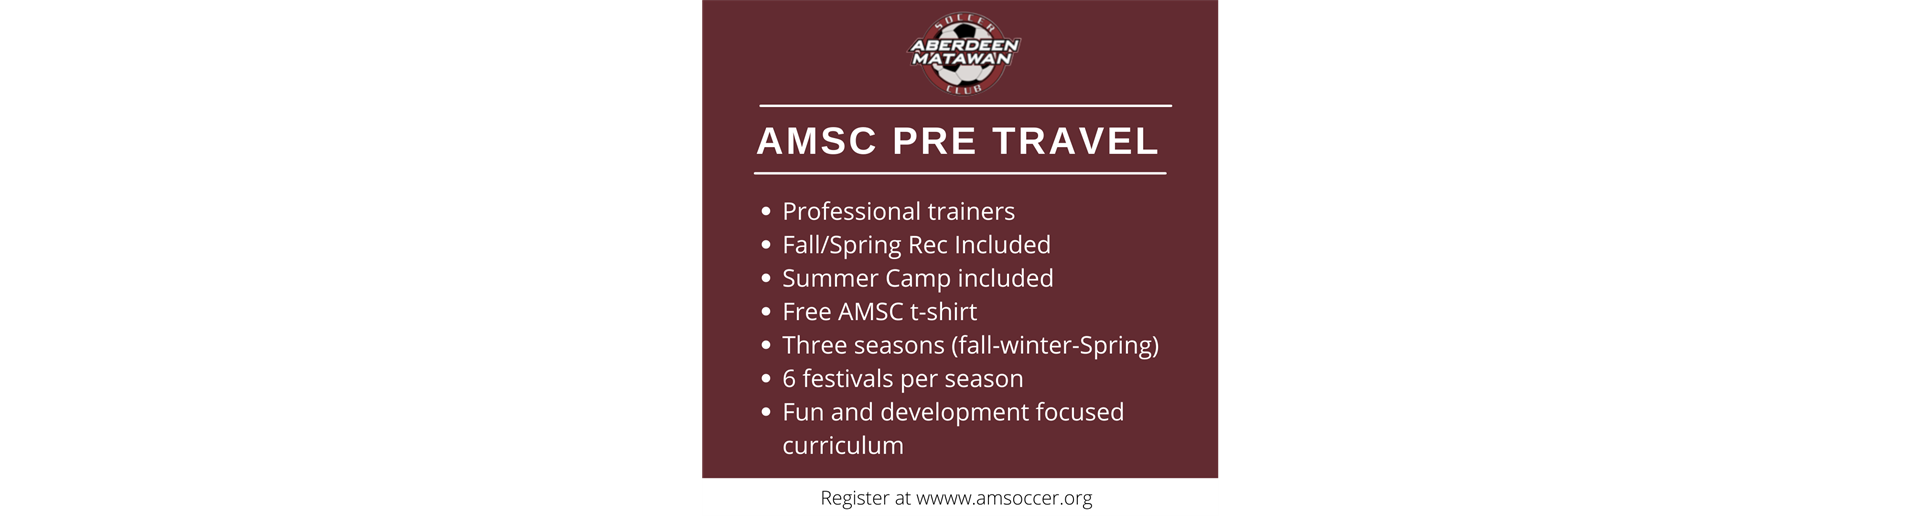 AMSC Pre Travel 